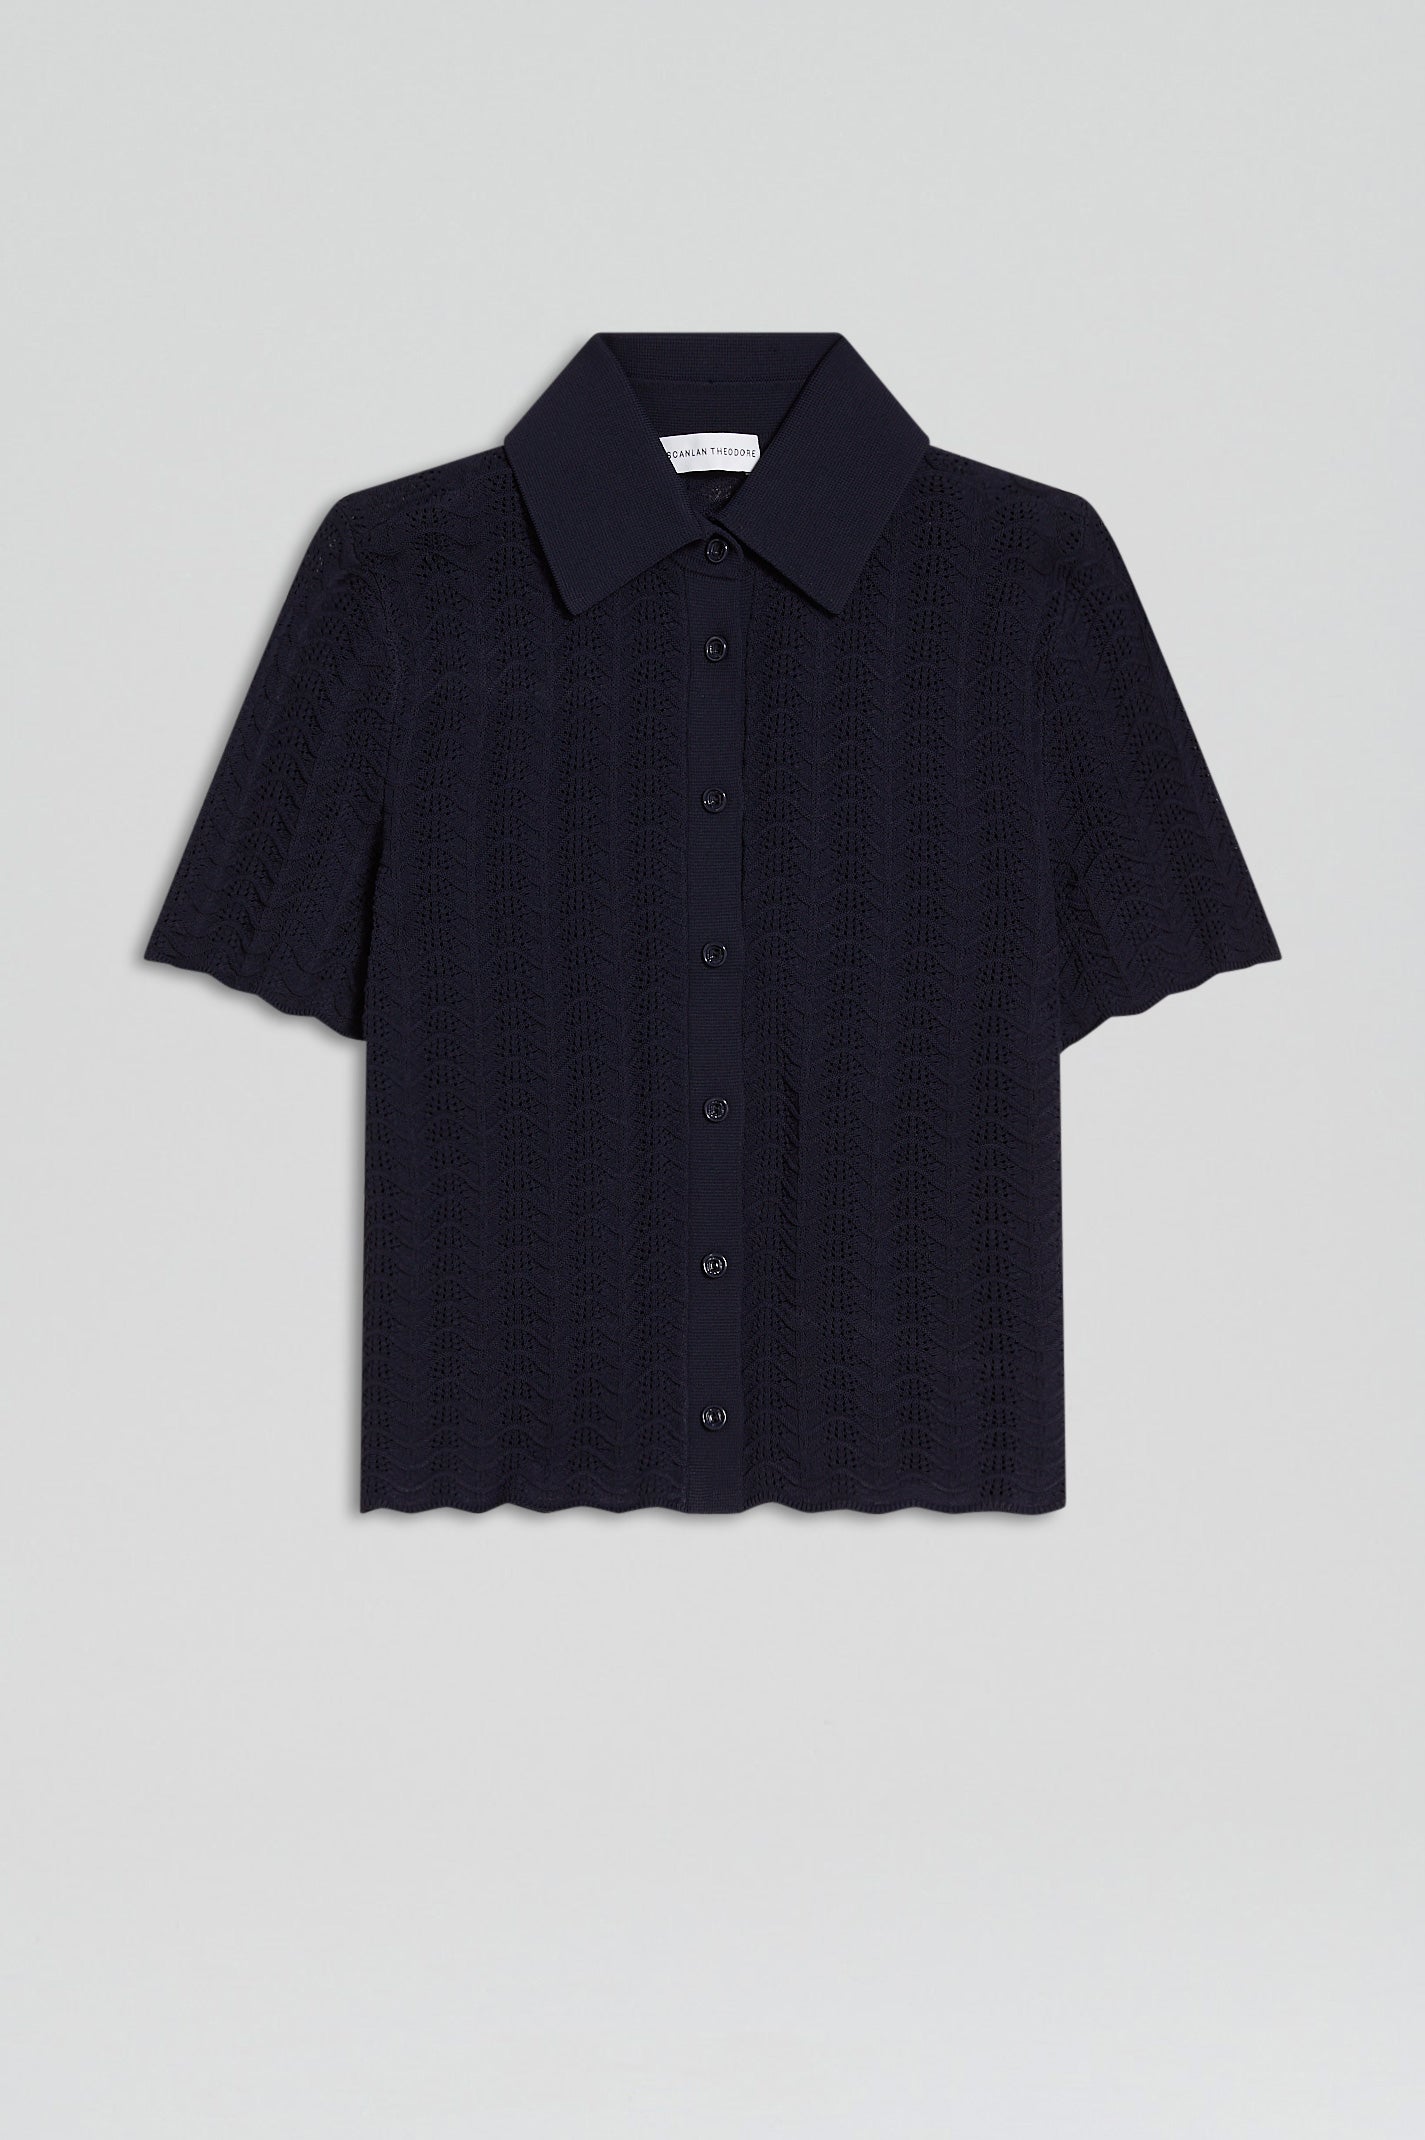 Pleat lace shirt – navy